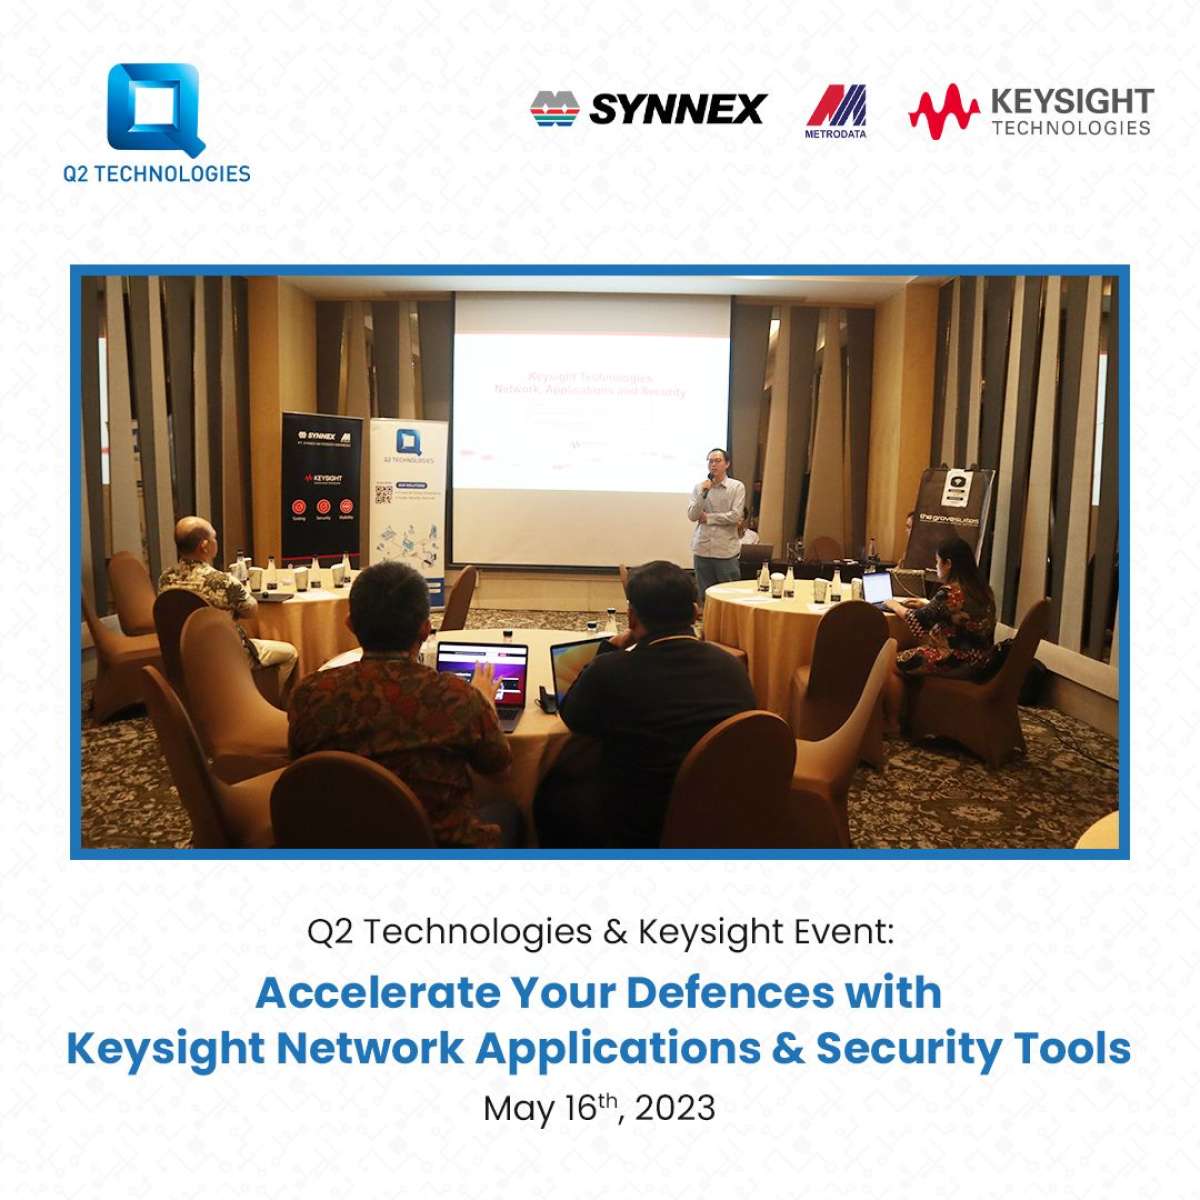 Q2 Technologies bersama Synnex Metrodata dan Keysight selenggarakan Workshop Cybersecurity 